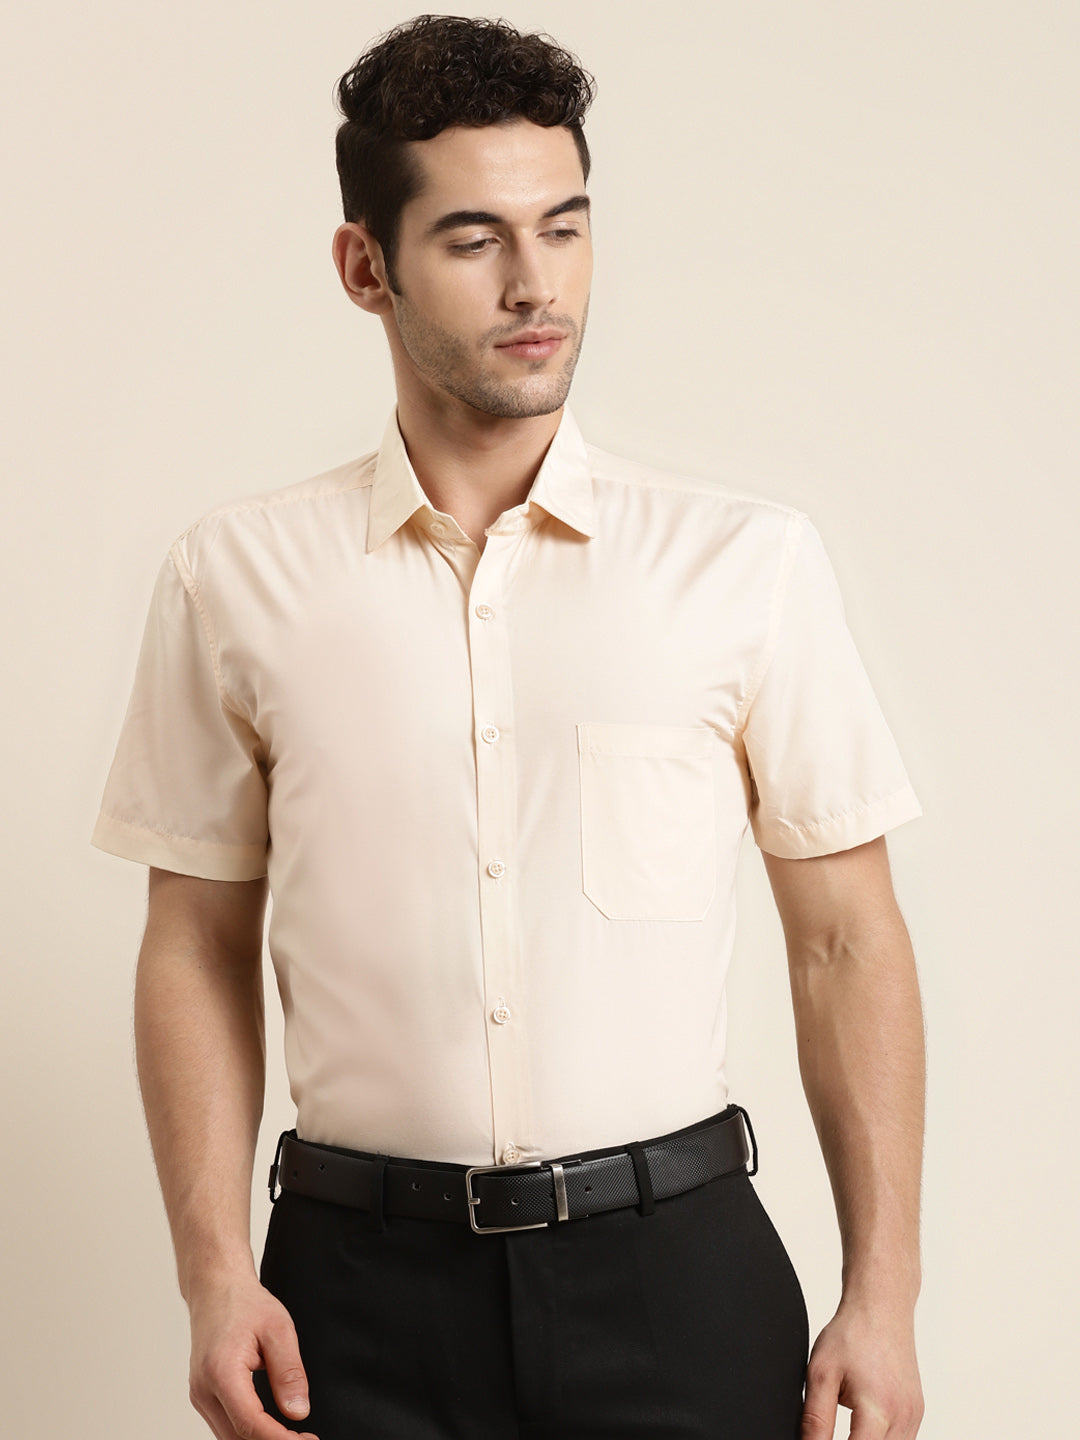 Men's Cotton Tan Half sleeves Casual Shirt